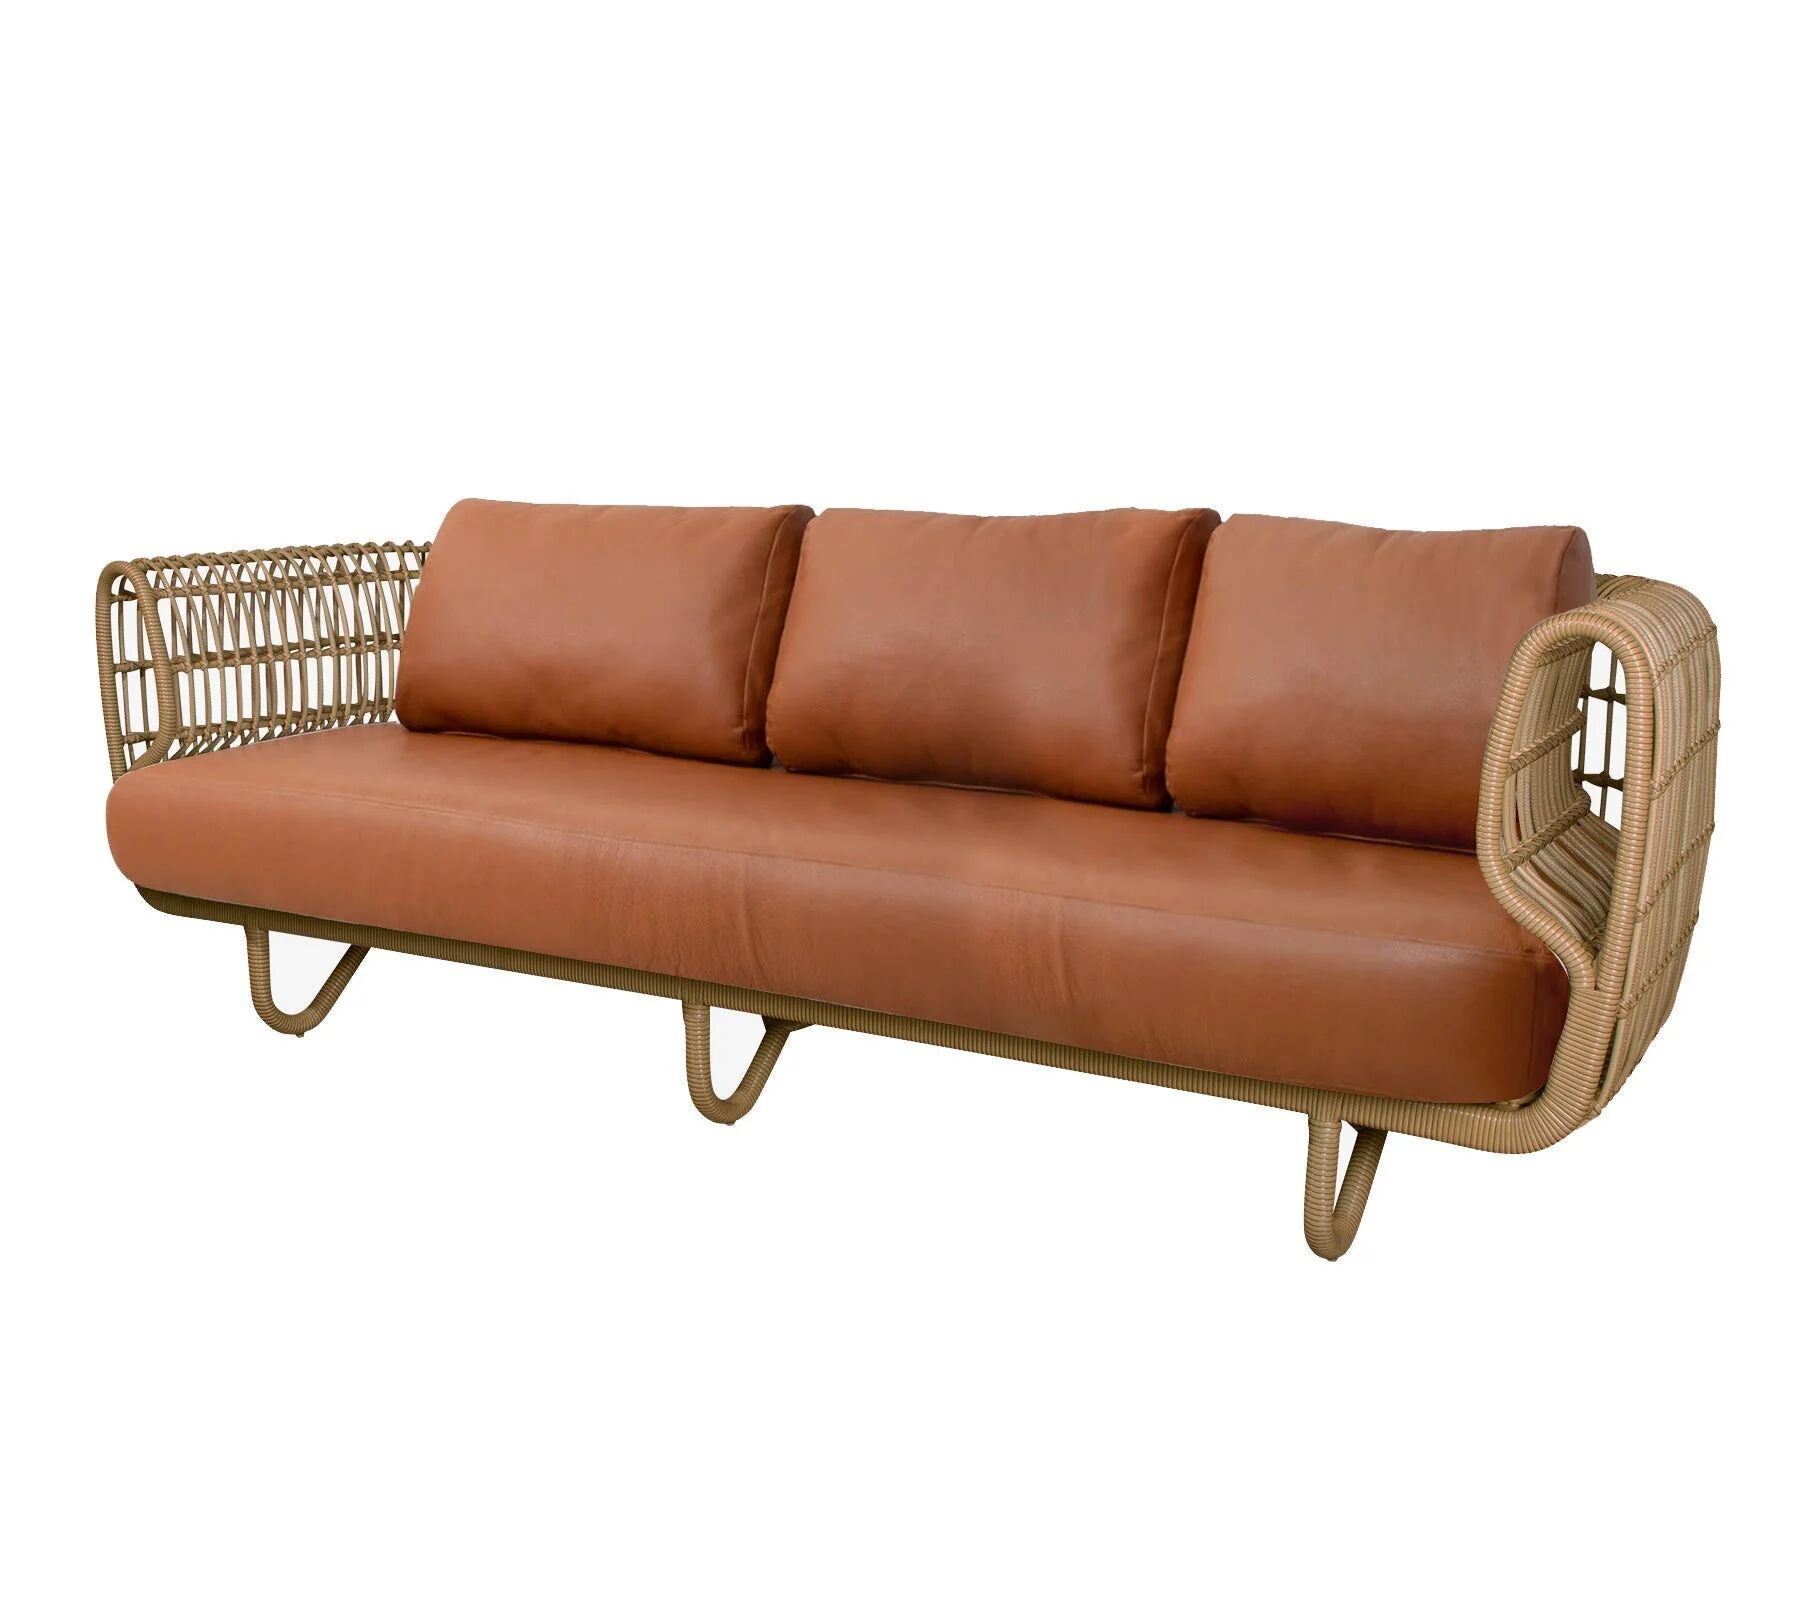 Cane-line Nest 3-Seater Sofa, Cognac Leather